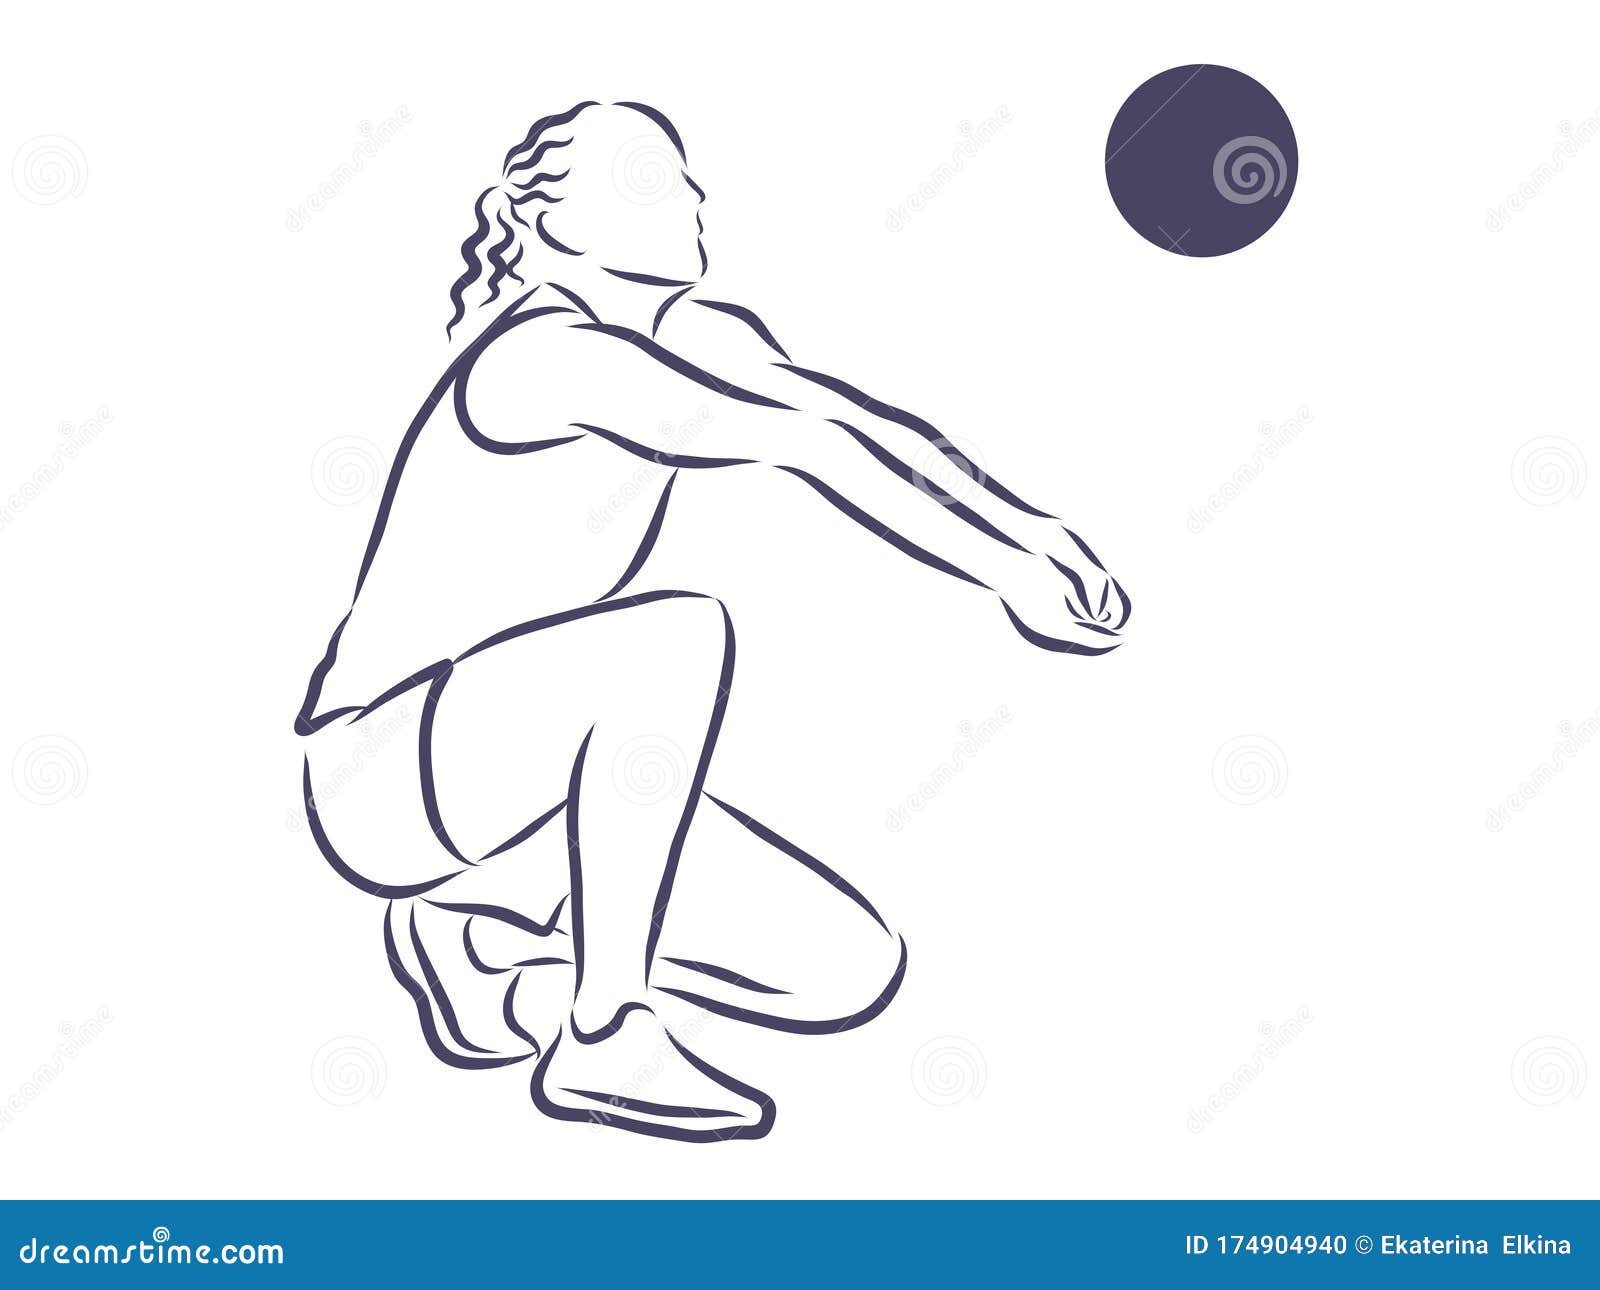 Descargar vóleibol. pelota para jugar voleibol. ilustración